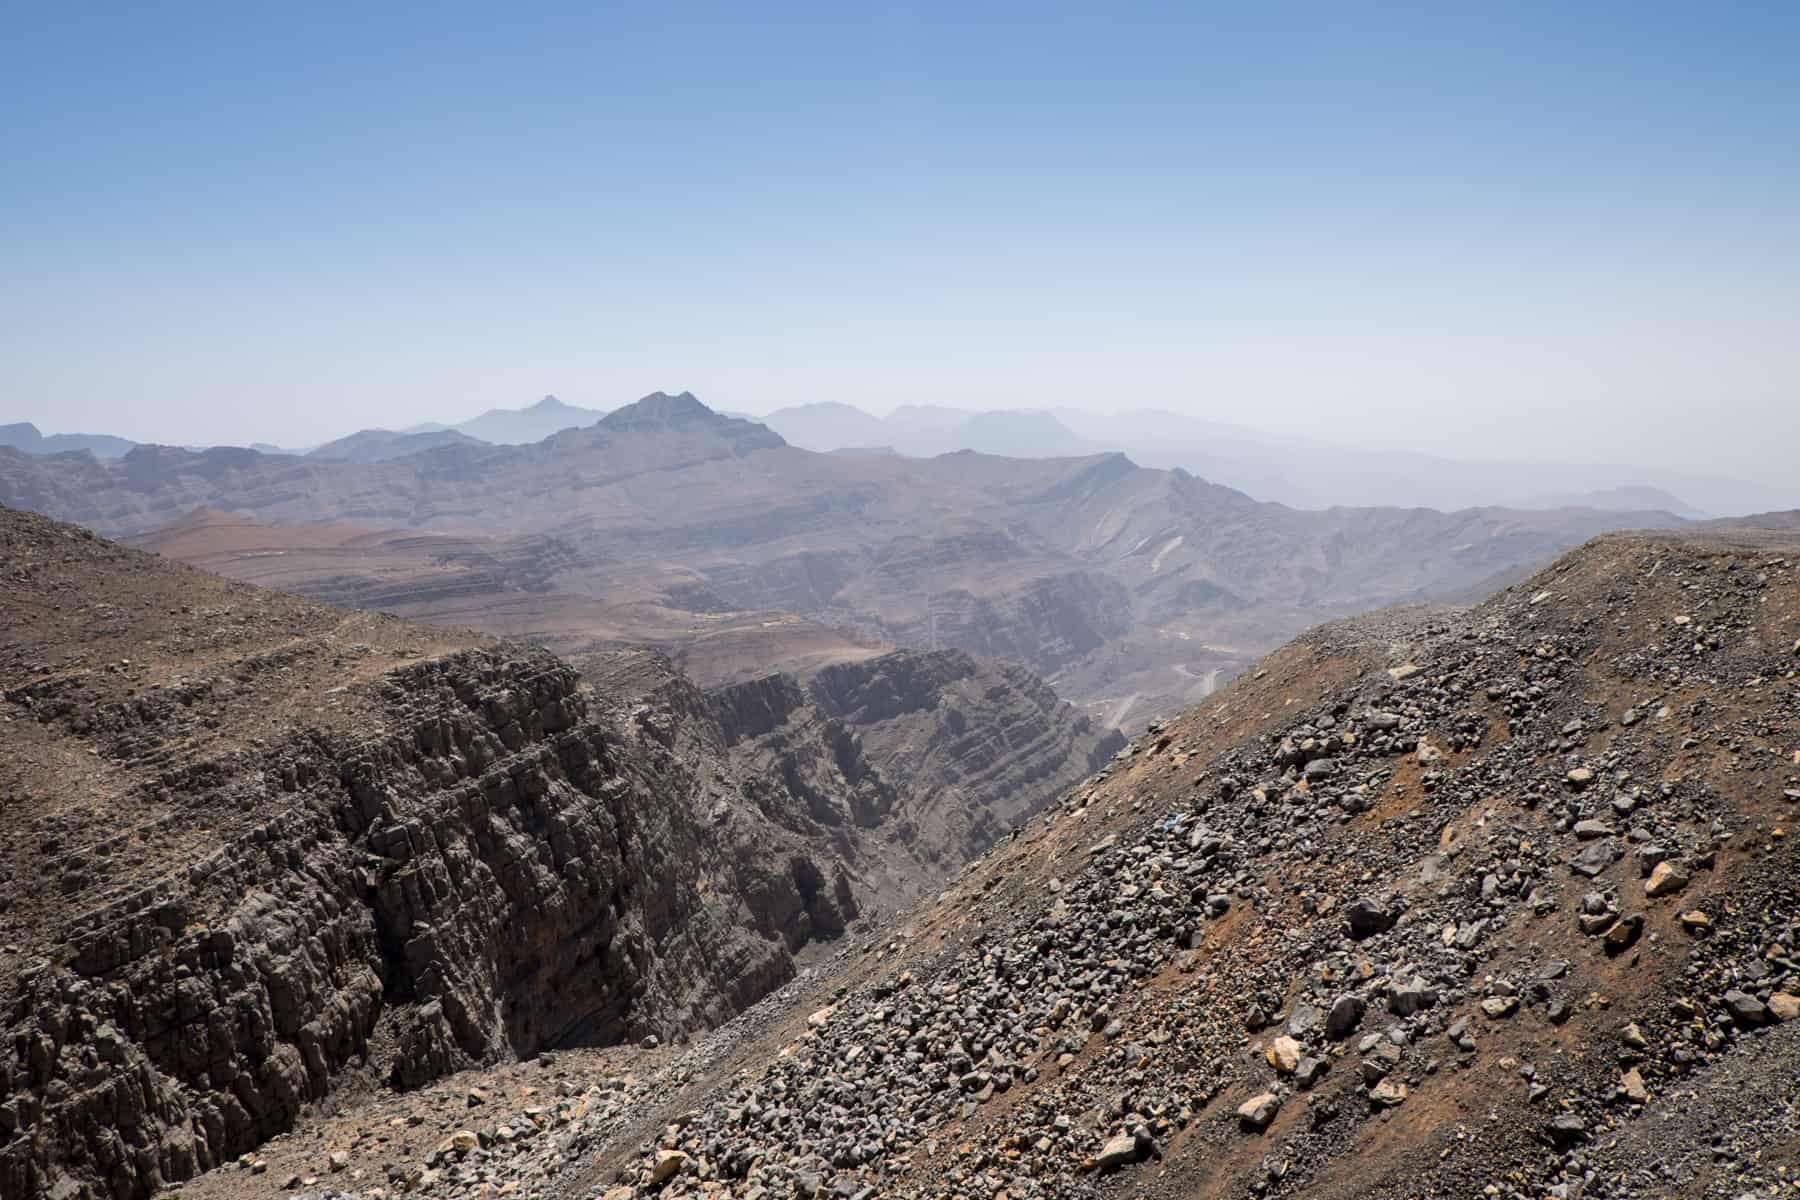 View of the dark, rocky, Jebel Jais mountain range in Ras Al Khaimah - the highest mountain in the UAE.